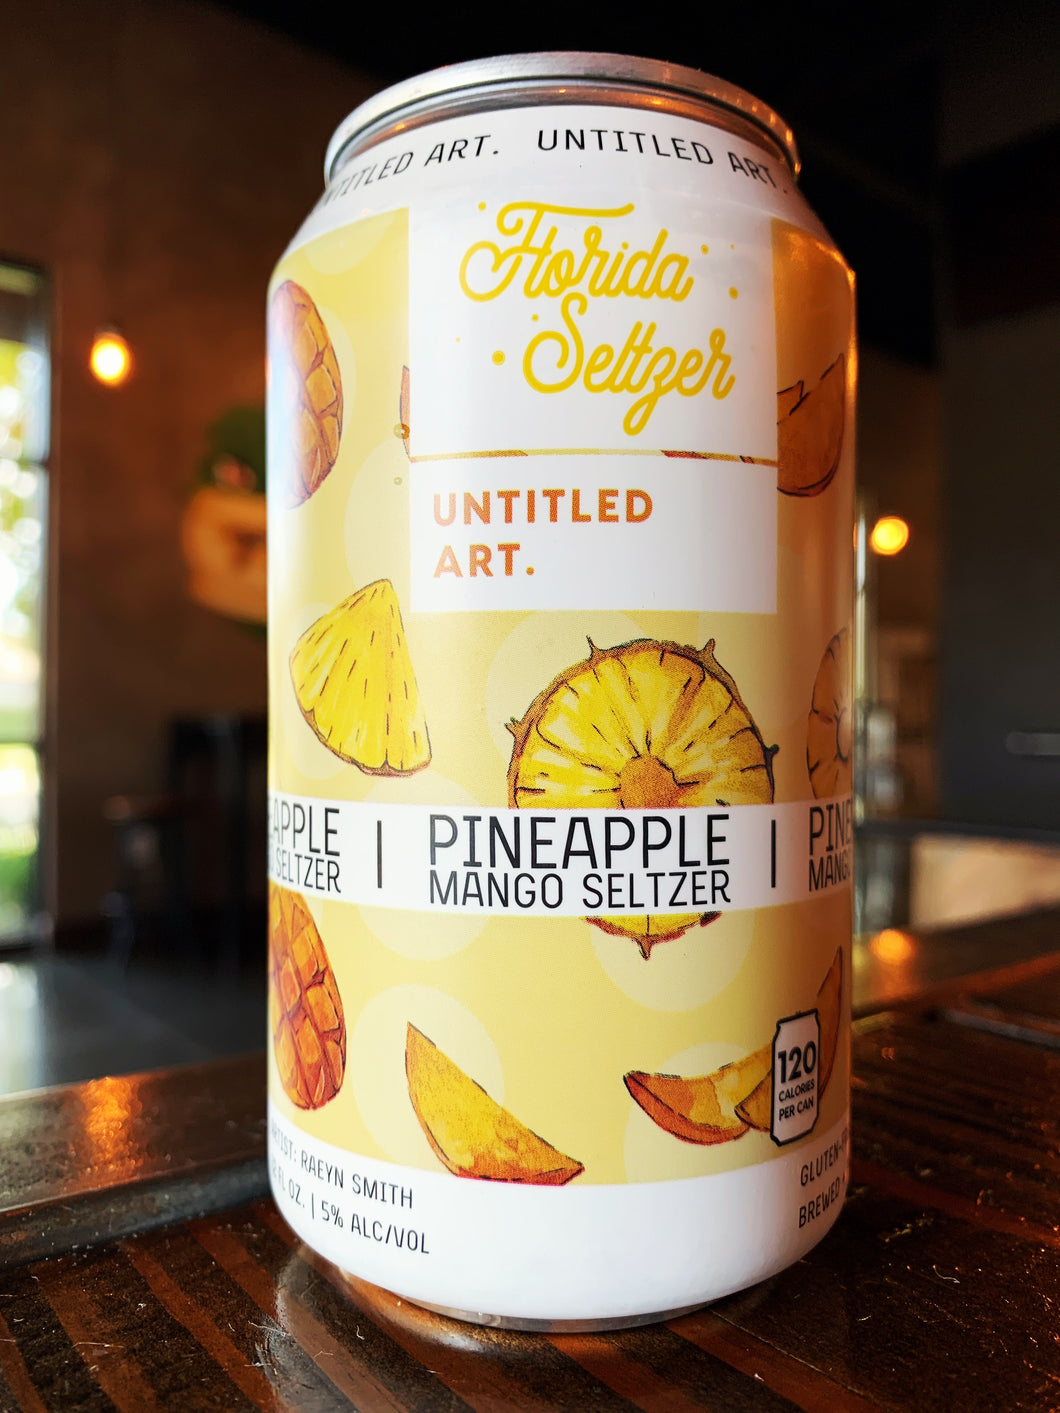 Untitled Art Florida Seltzer Pineapple Mango